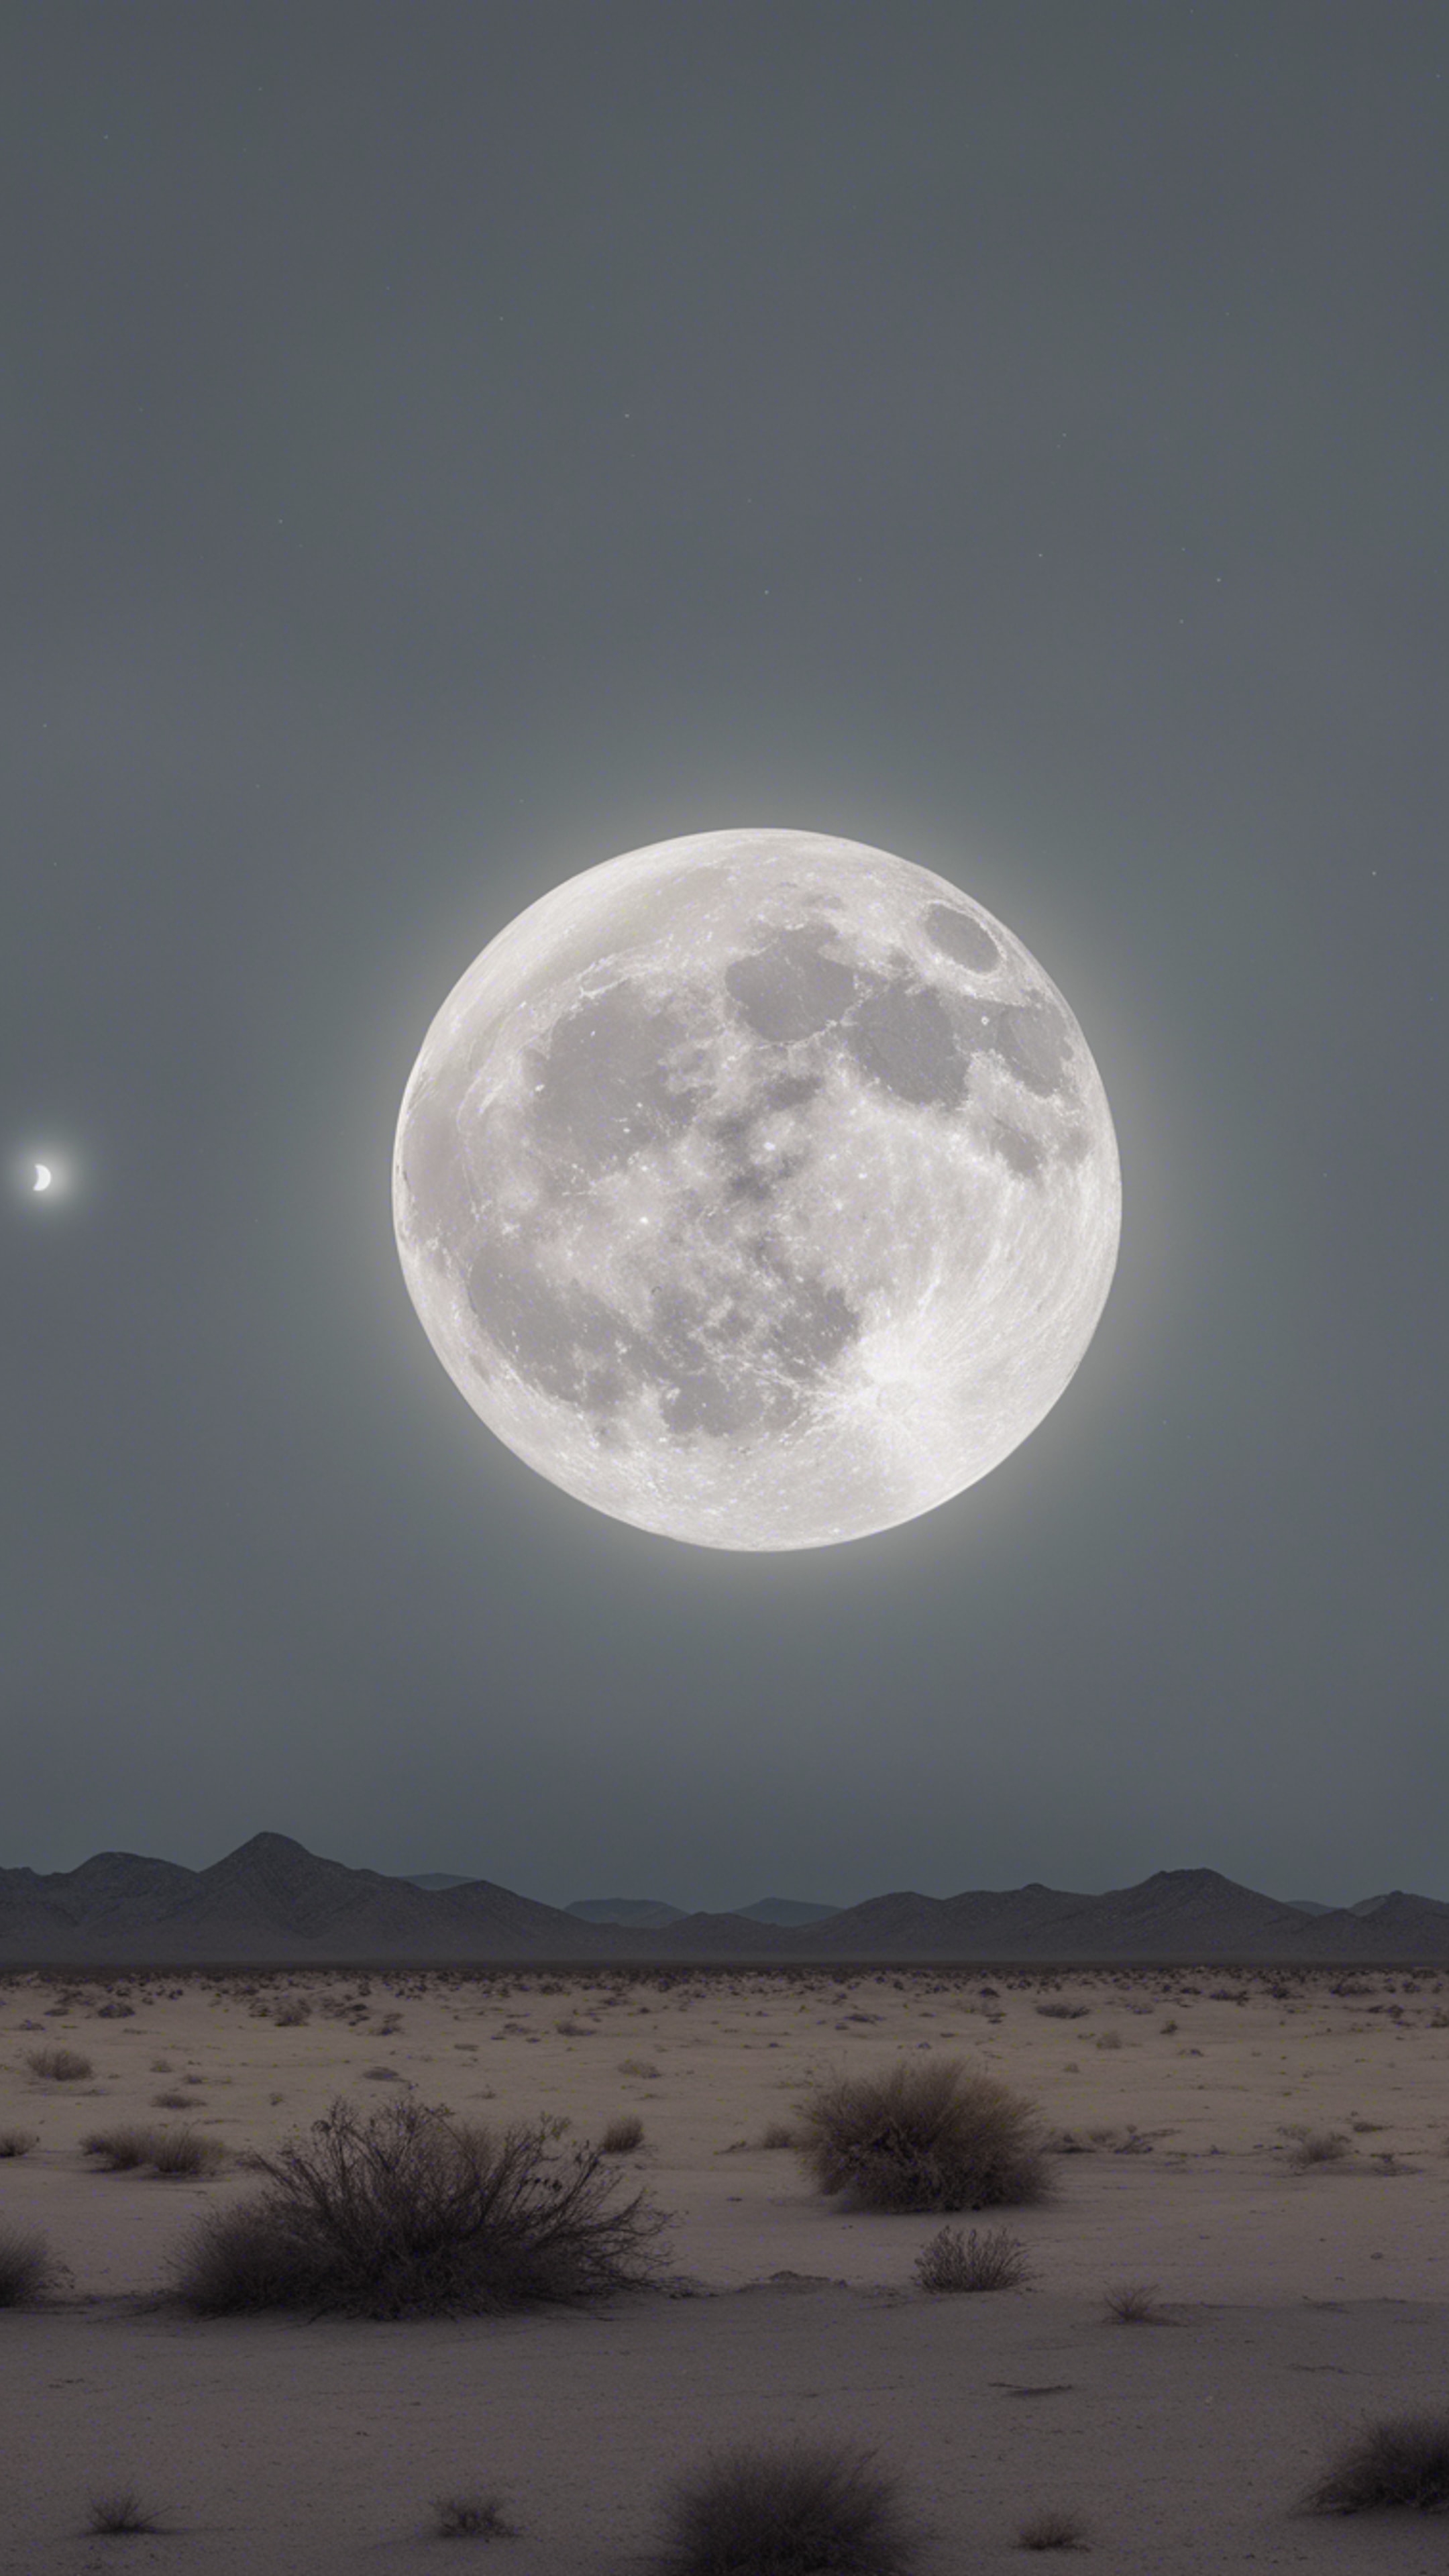 An eerie full moon casting a light gray hue over a desolate desert landscape. کاغذ دیواری[b219b4d700dc4cdd8b88]